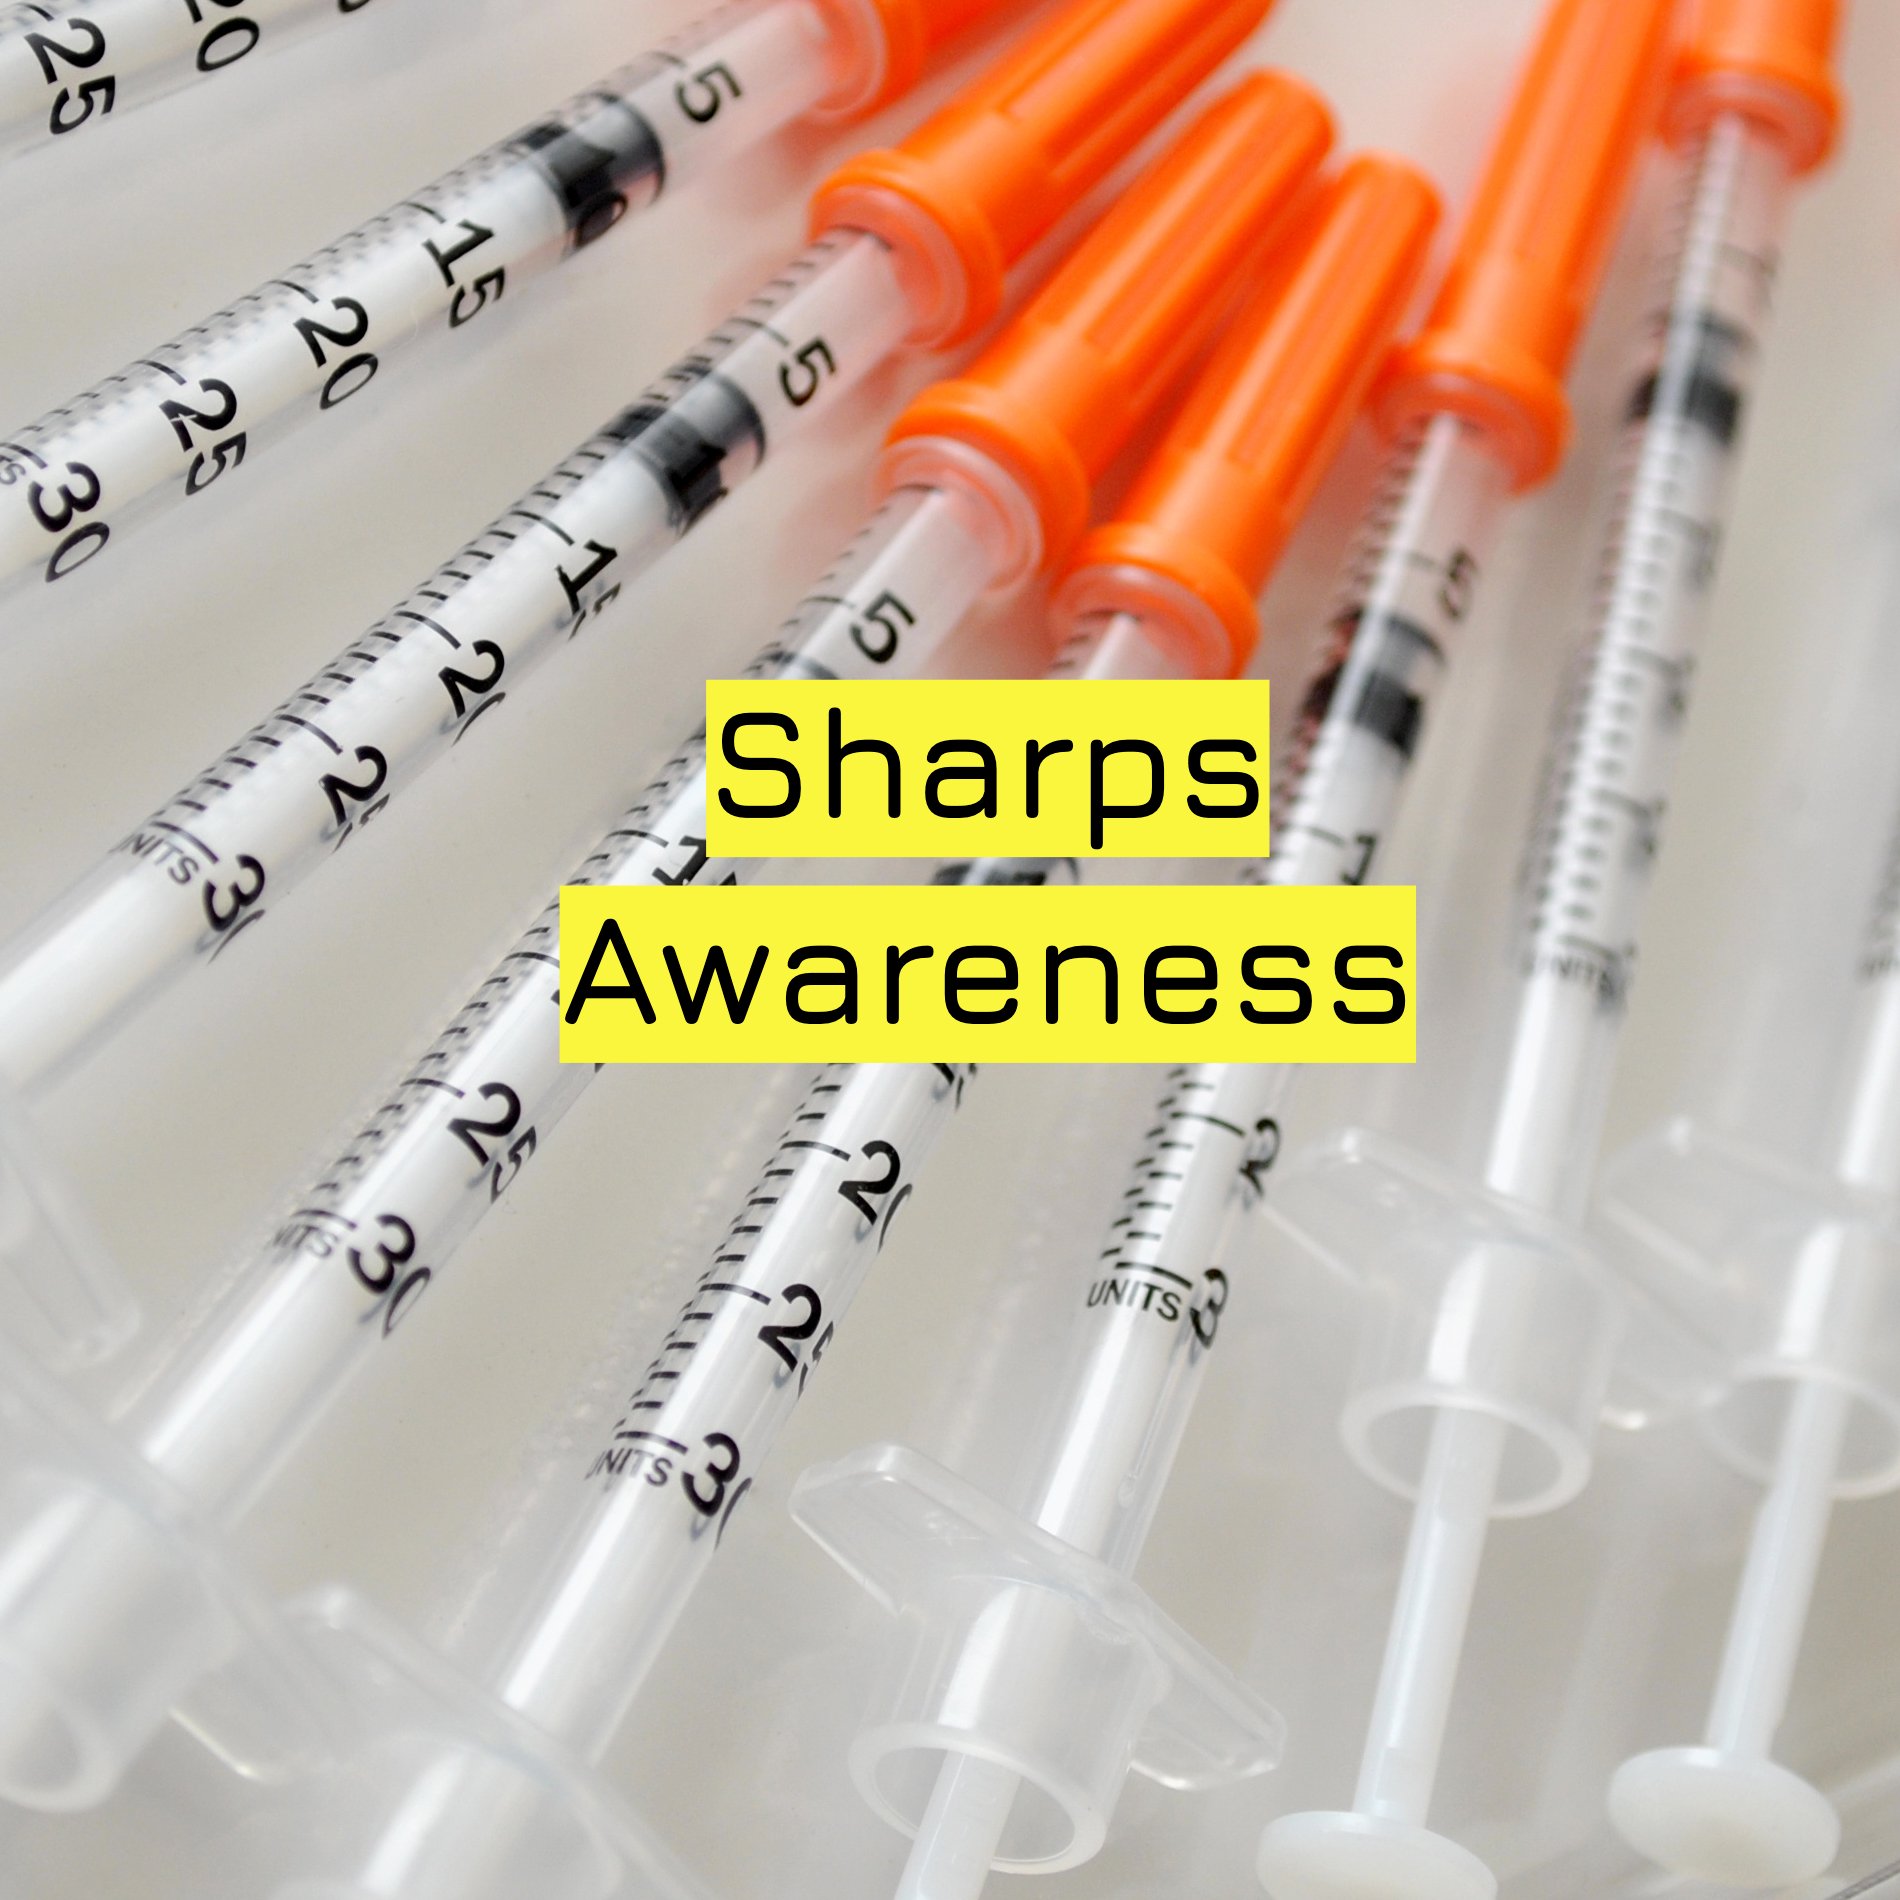 Sharps Awareness .jpg